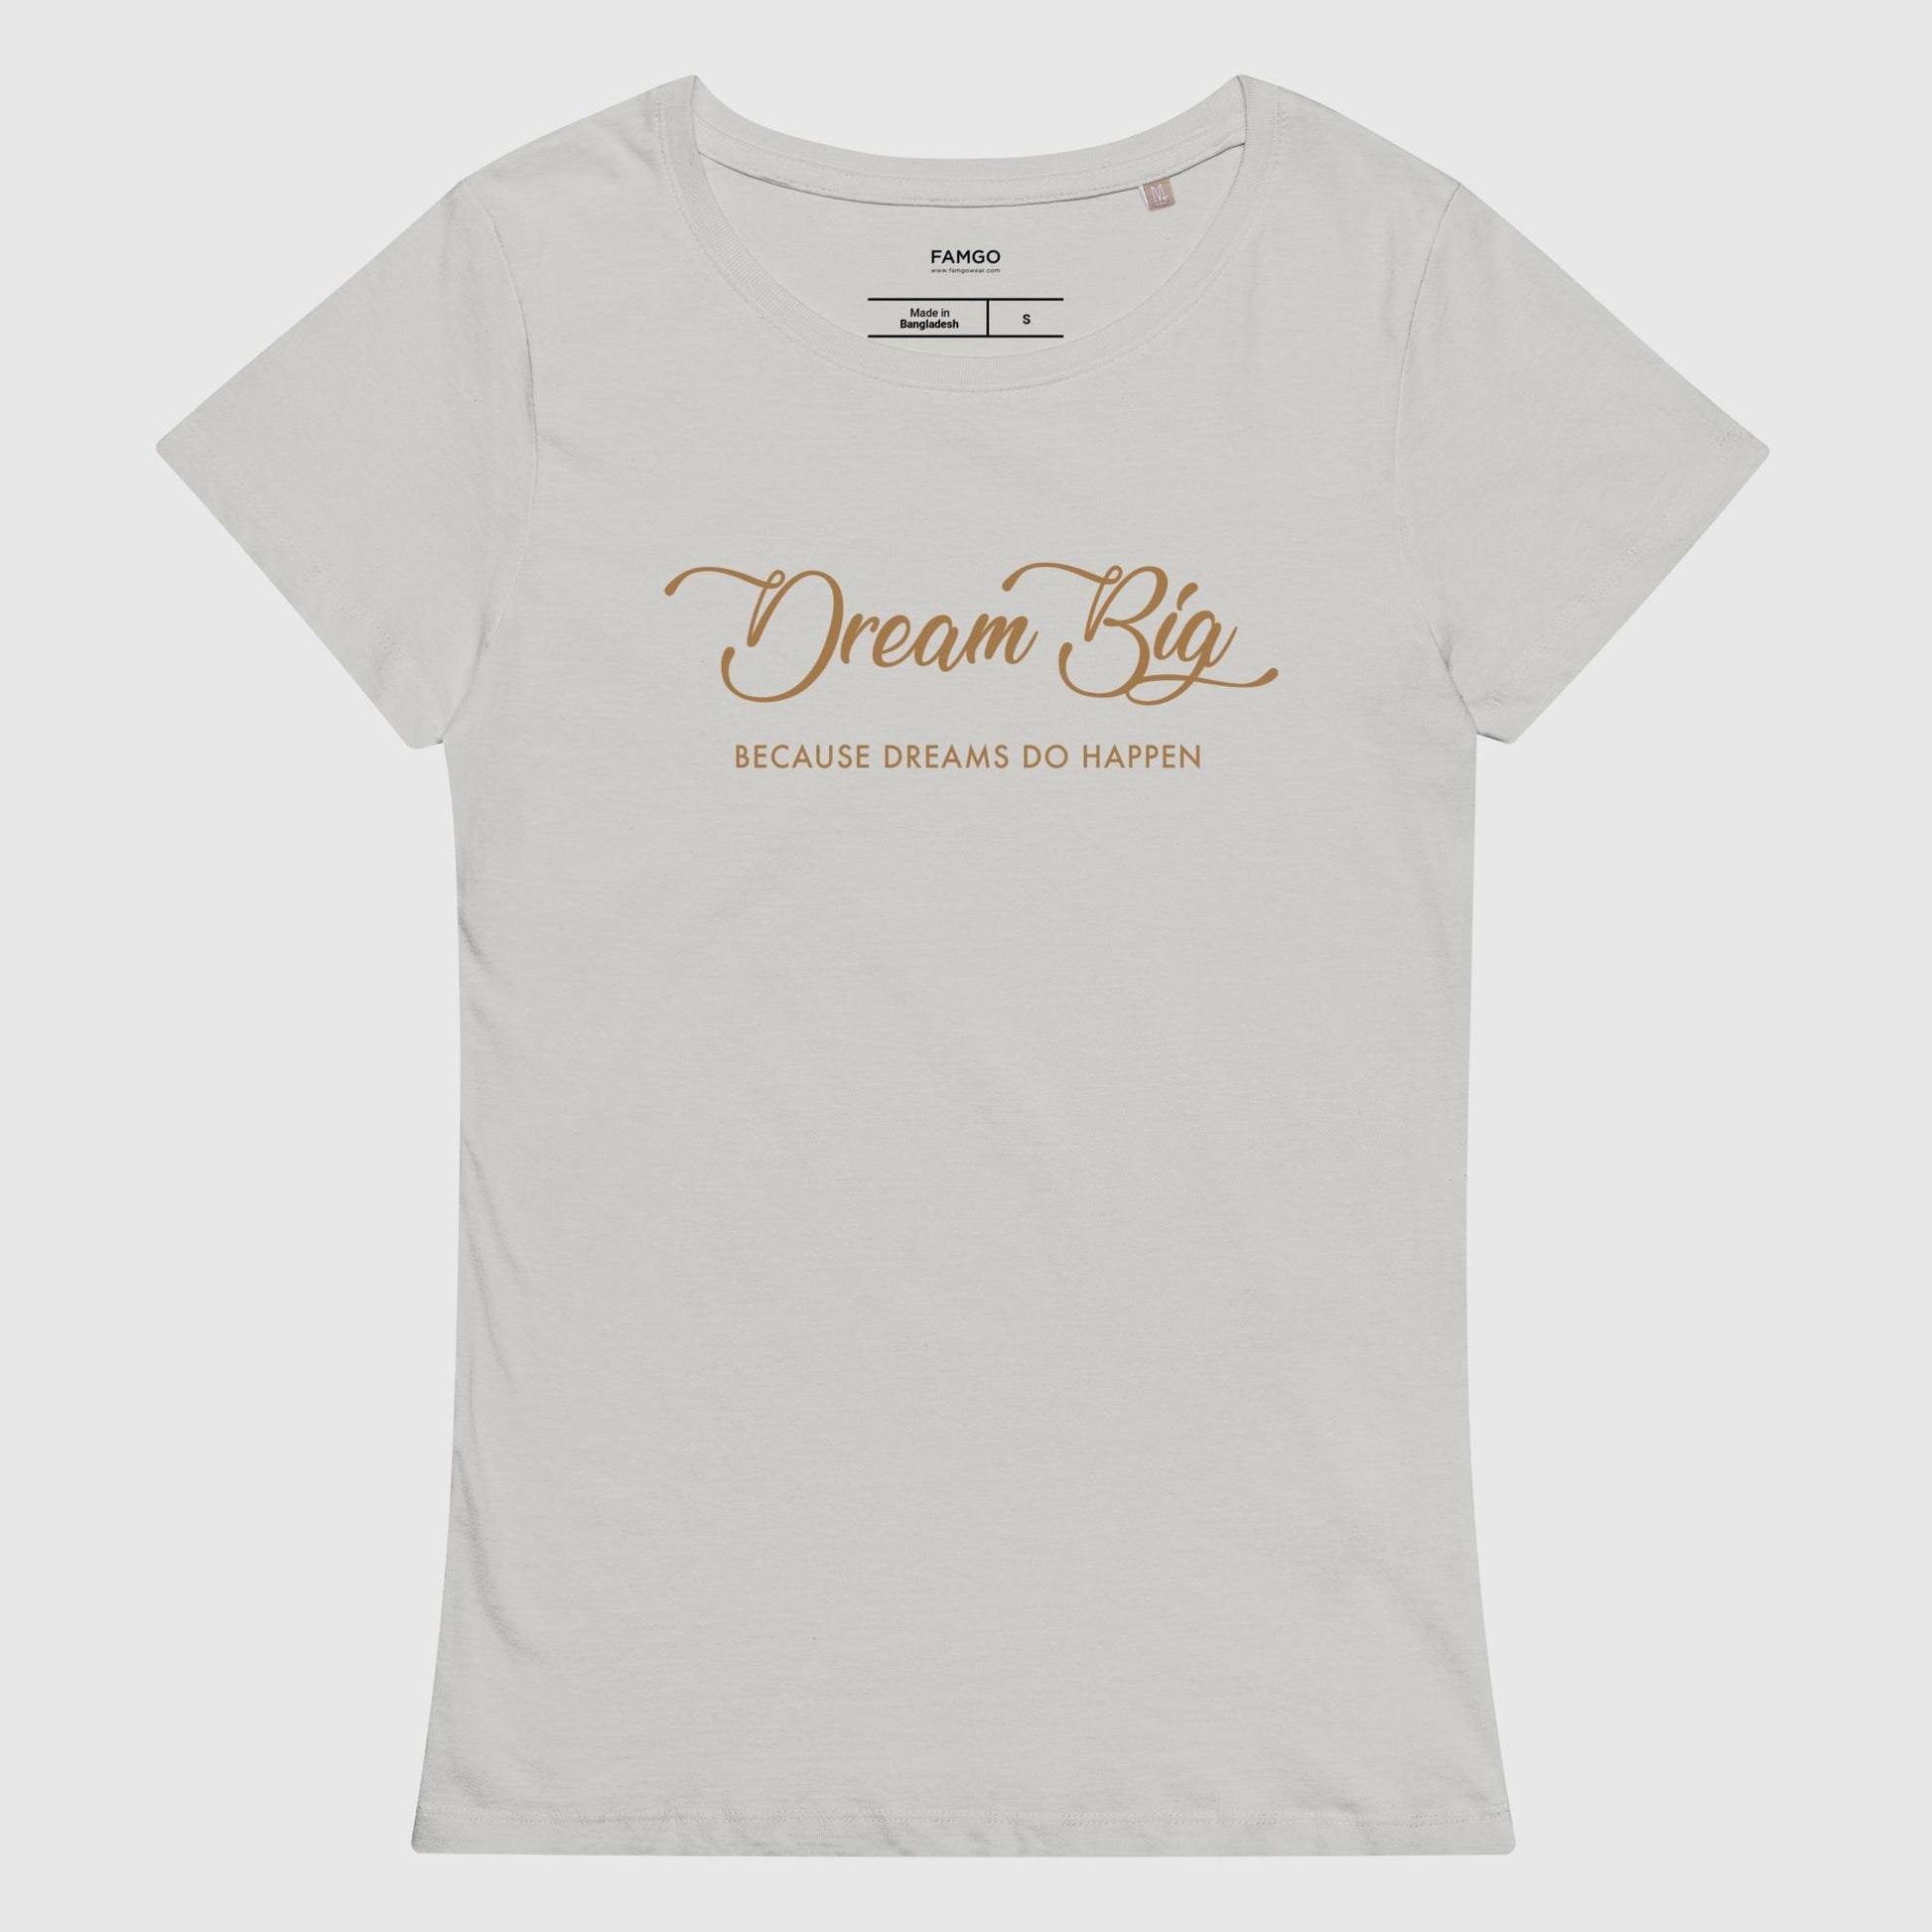 Women's gray organic cotton t-shirt that features Alex Morgan's inspirational quote, "Dream Big - Because Dreams Do Happen."